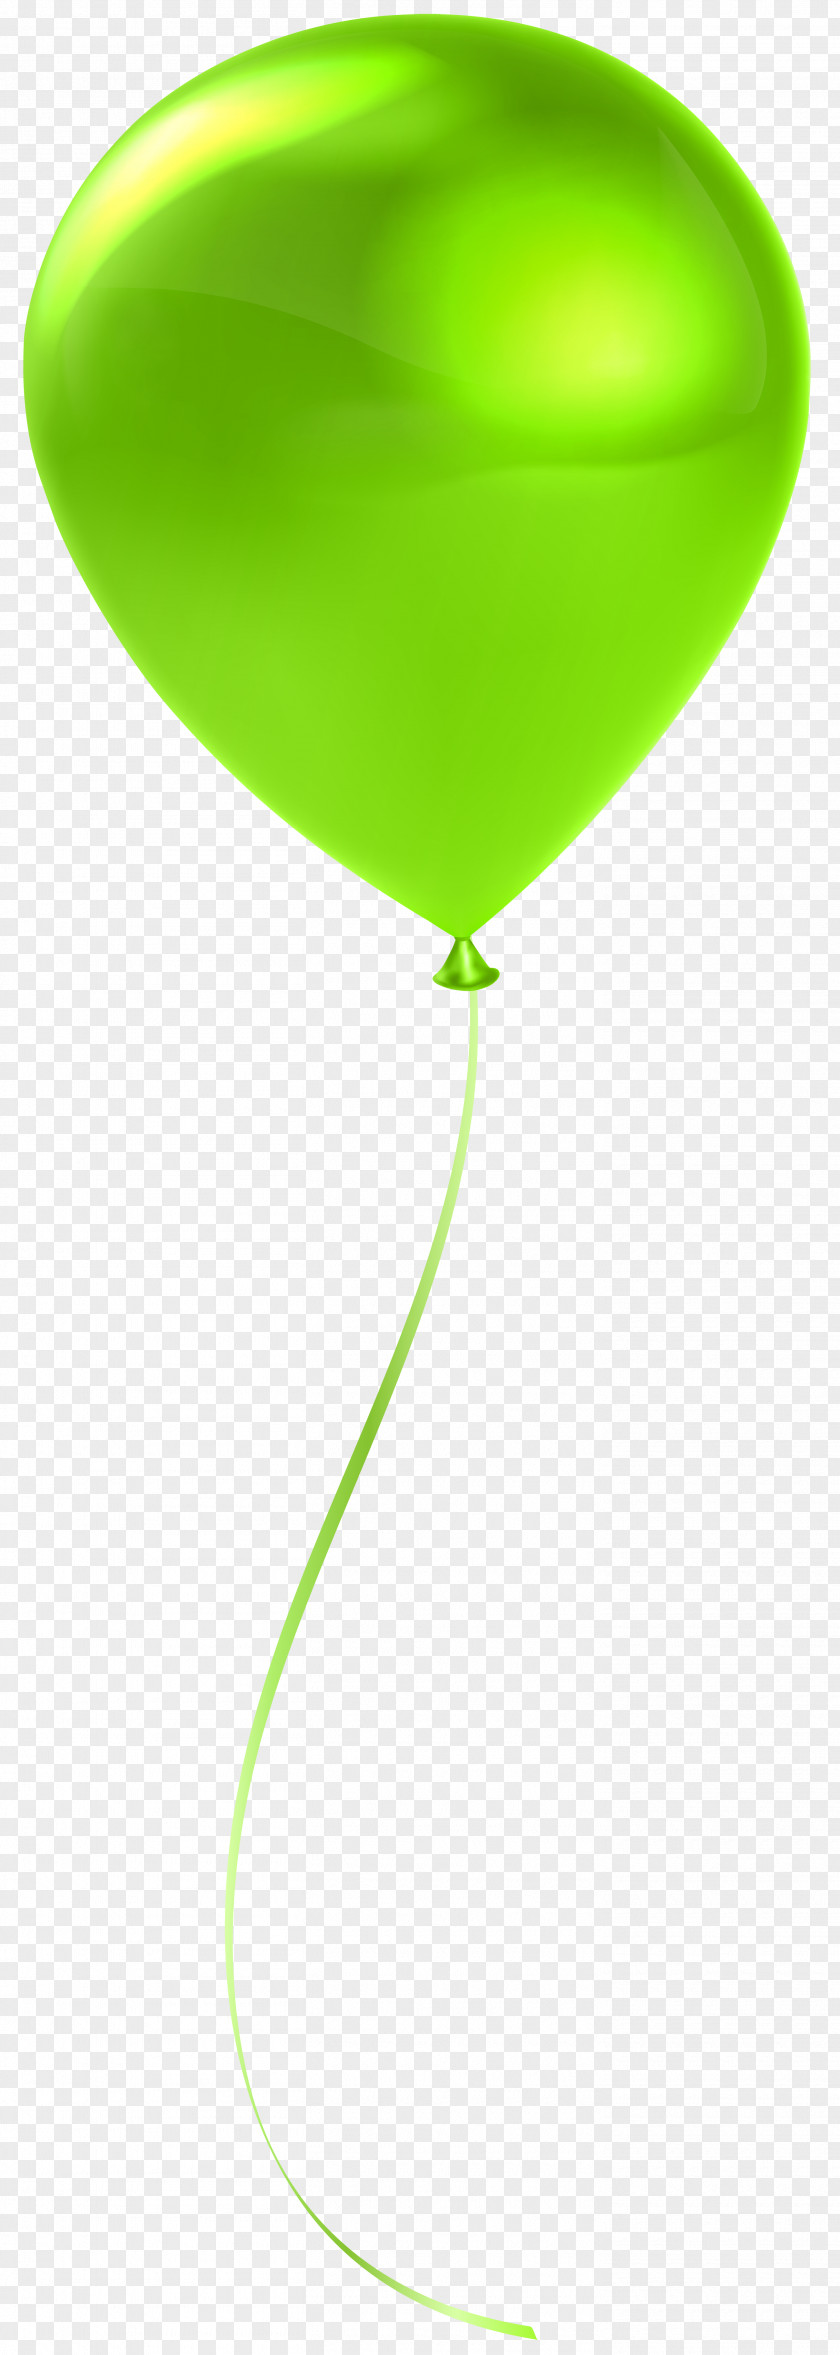 Single Lime Balloon Transparent Clip Art Green Pink Heart PNG